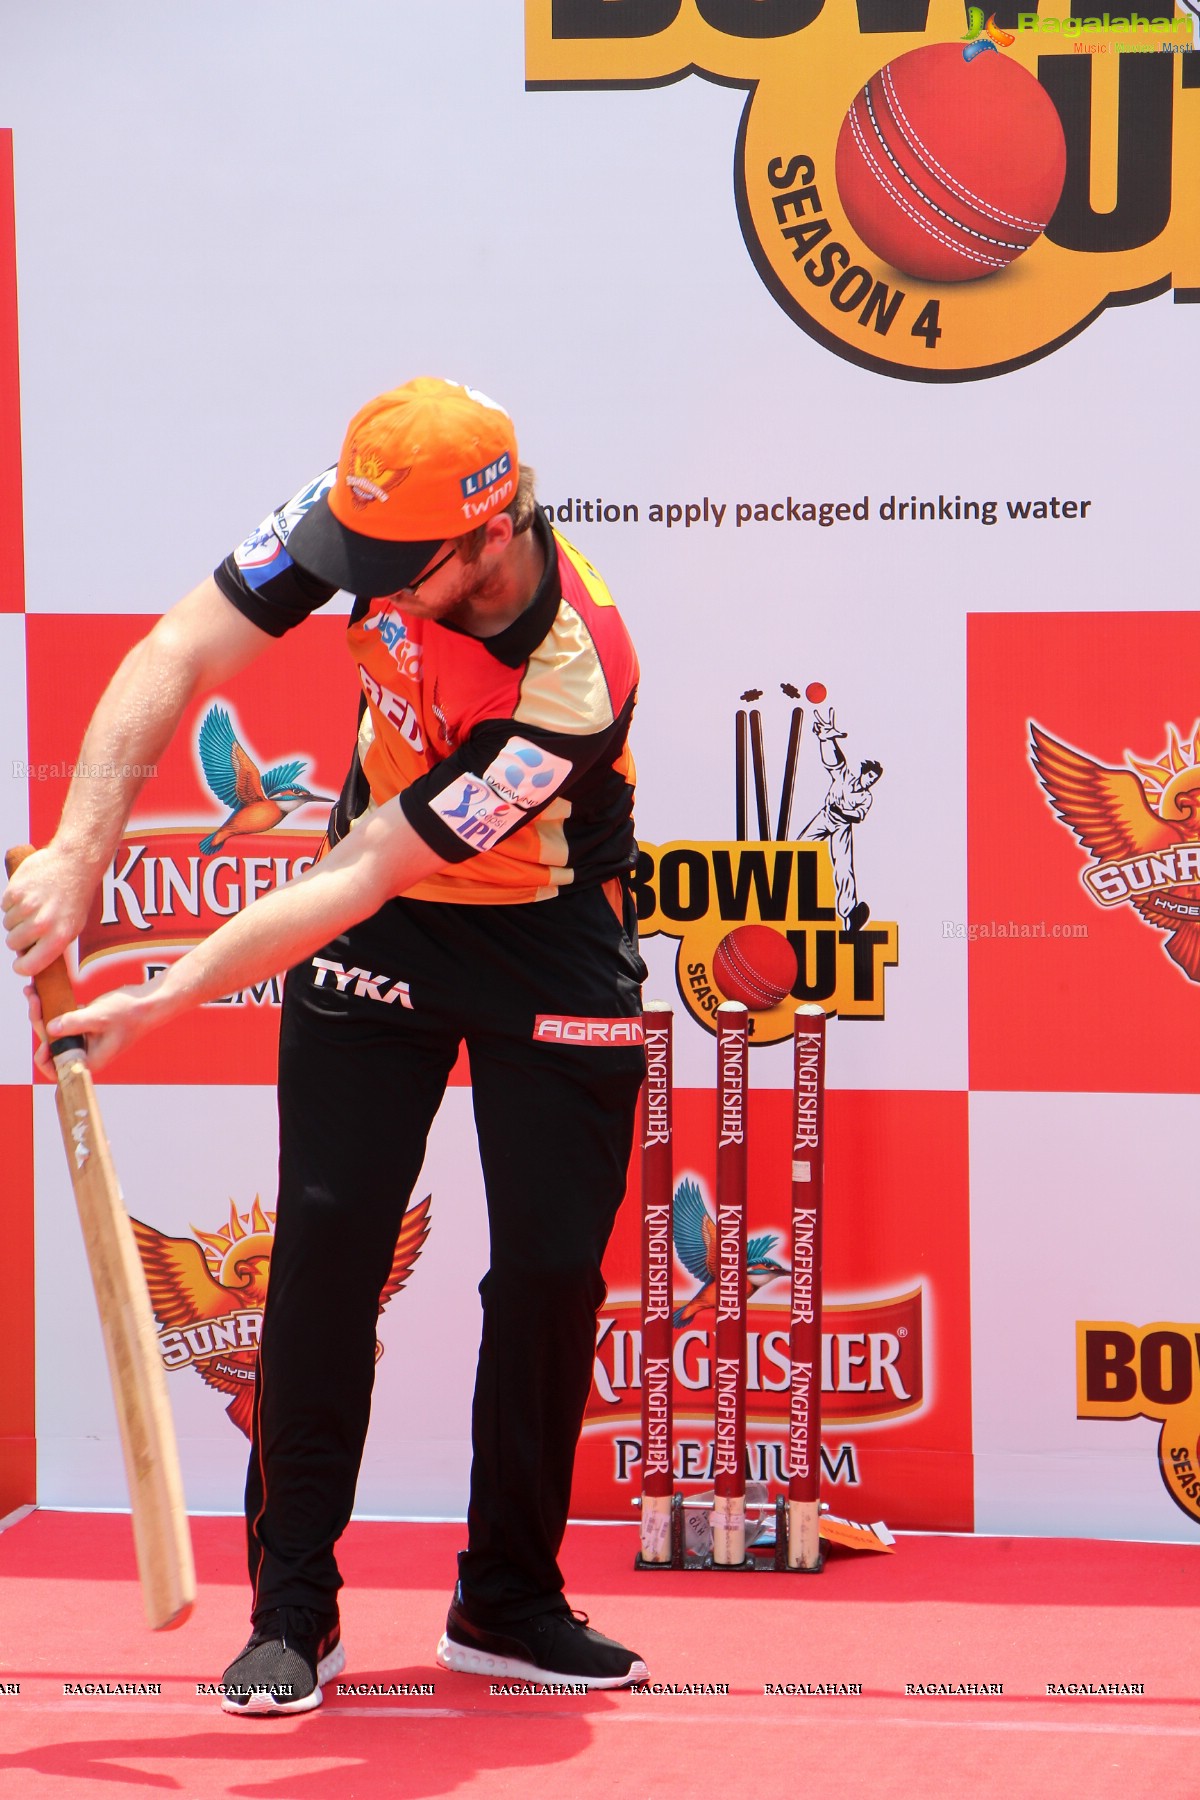 Kingfisher Premium 'Bowl Out' Showcase